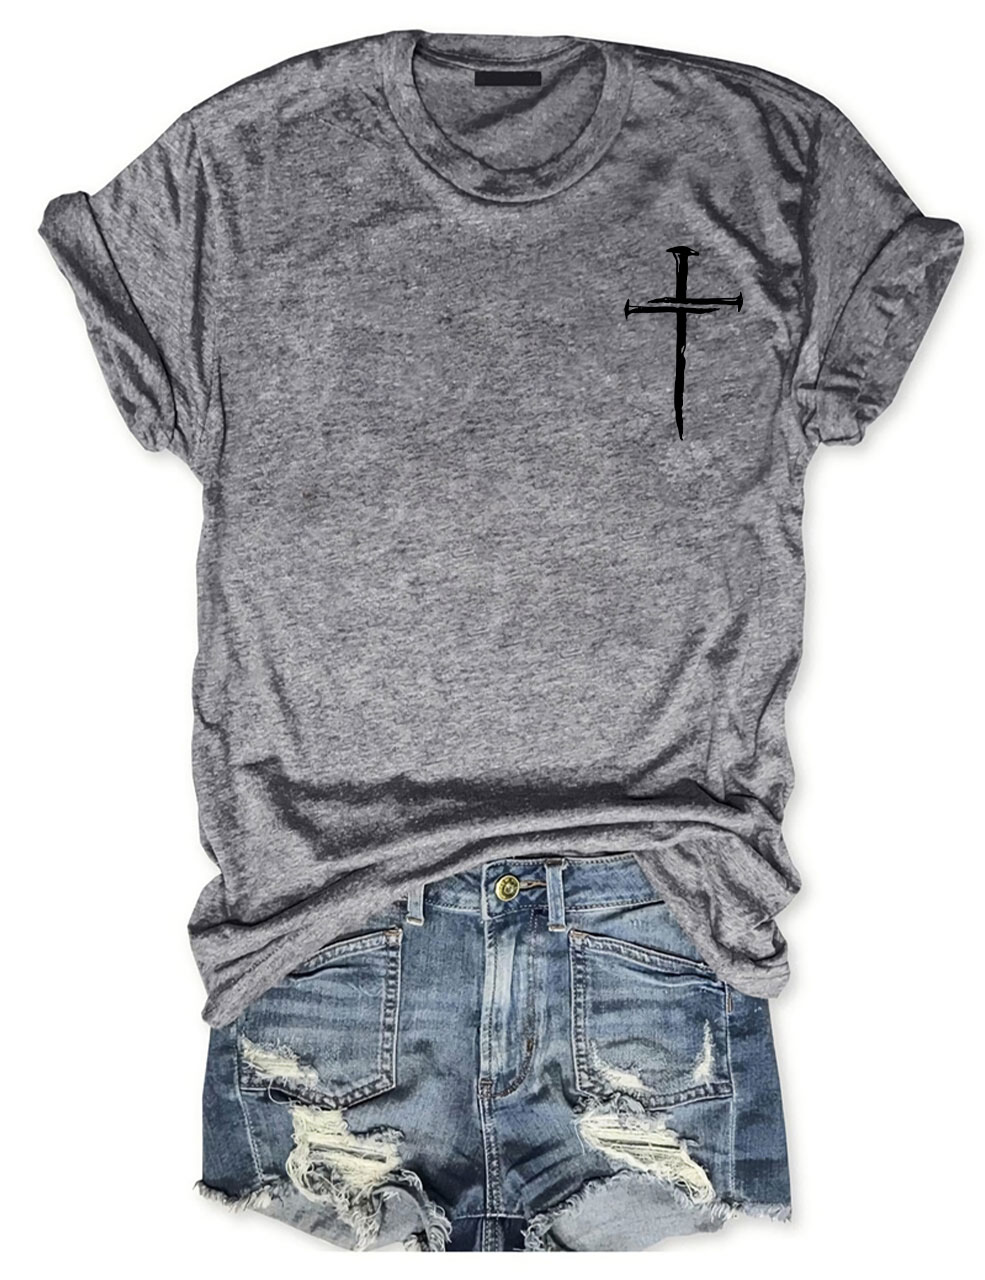 Christian T-shirt